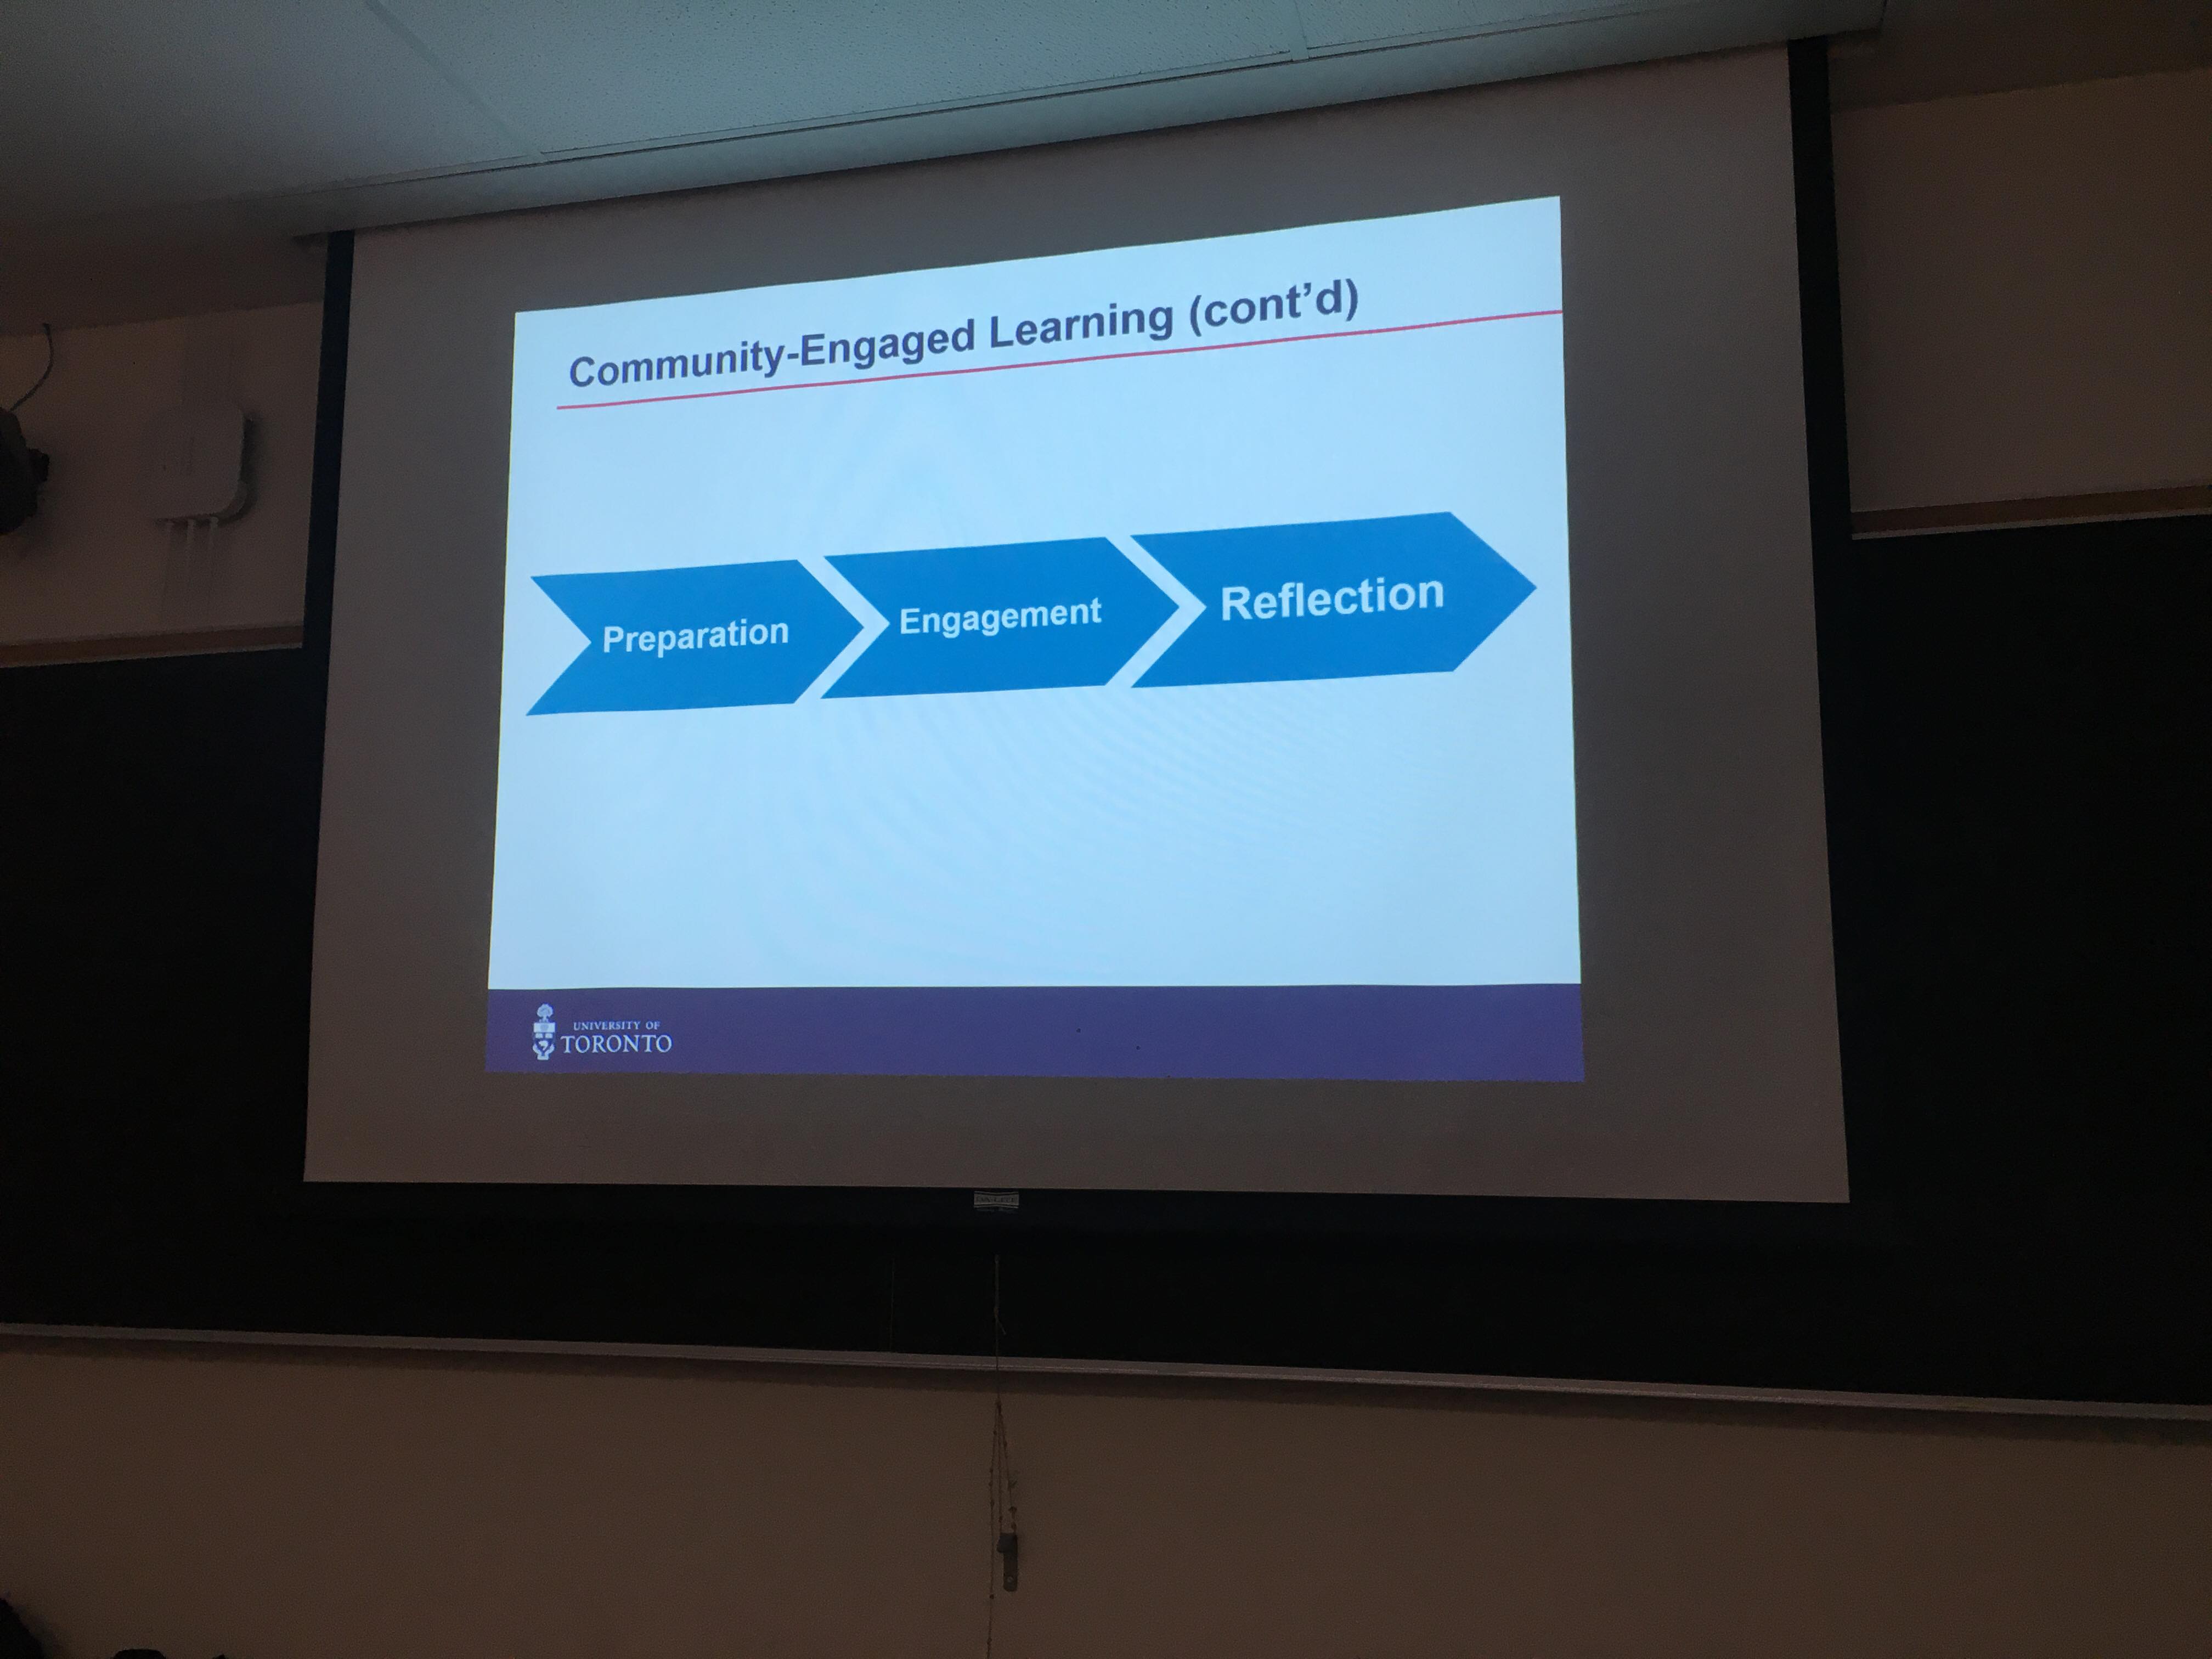 Community Engaged Learning: Preparation, Engagement, and Reflection